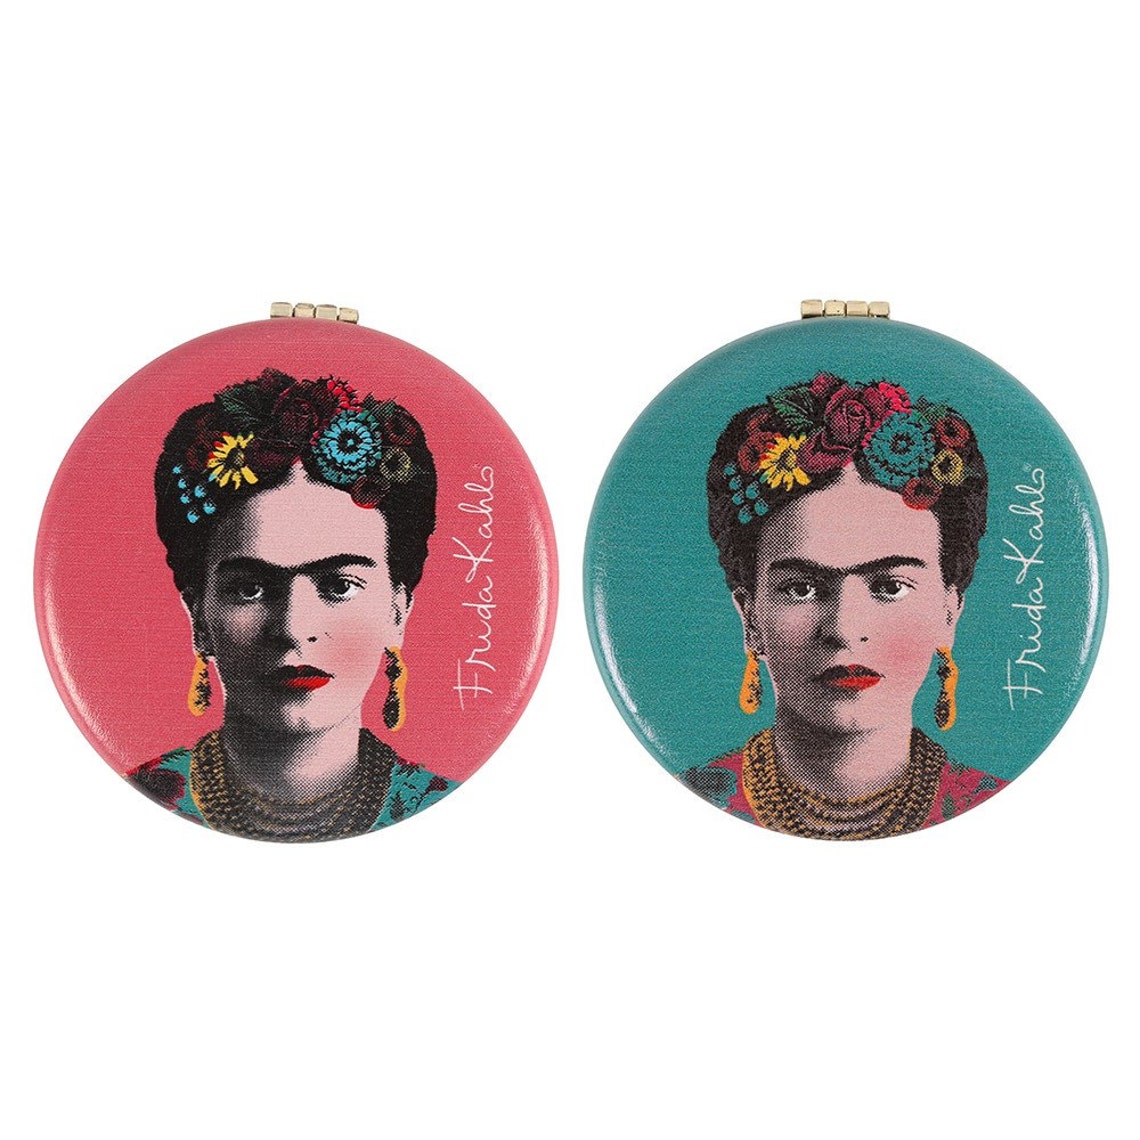 Frida Kahlo gift compact mirror Frida Kahlo lover compact | Etsy